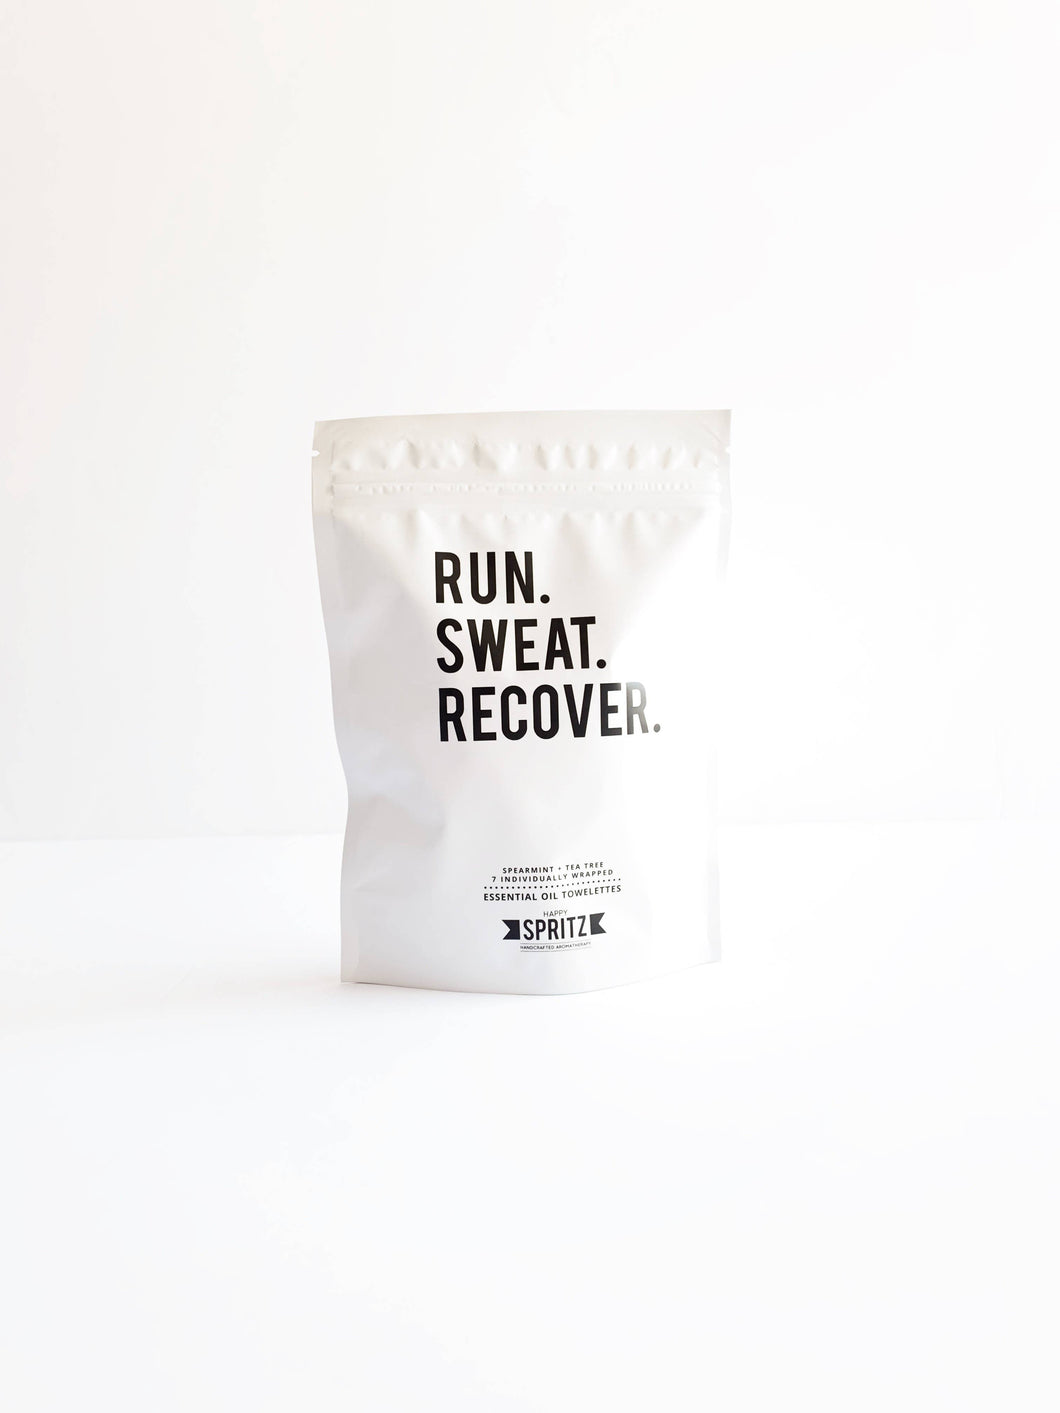 Run Sweat Recover - 7 day bag